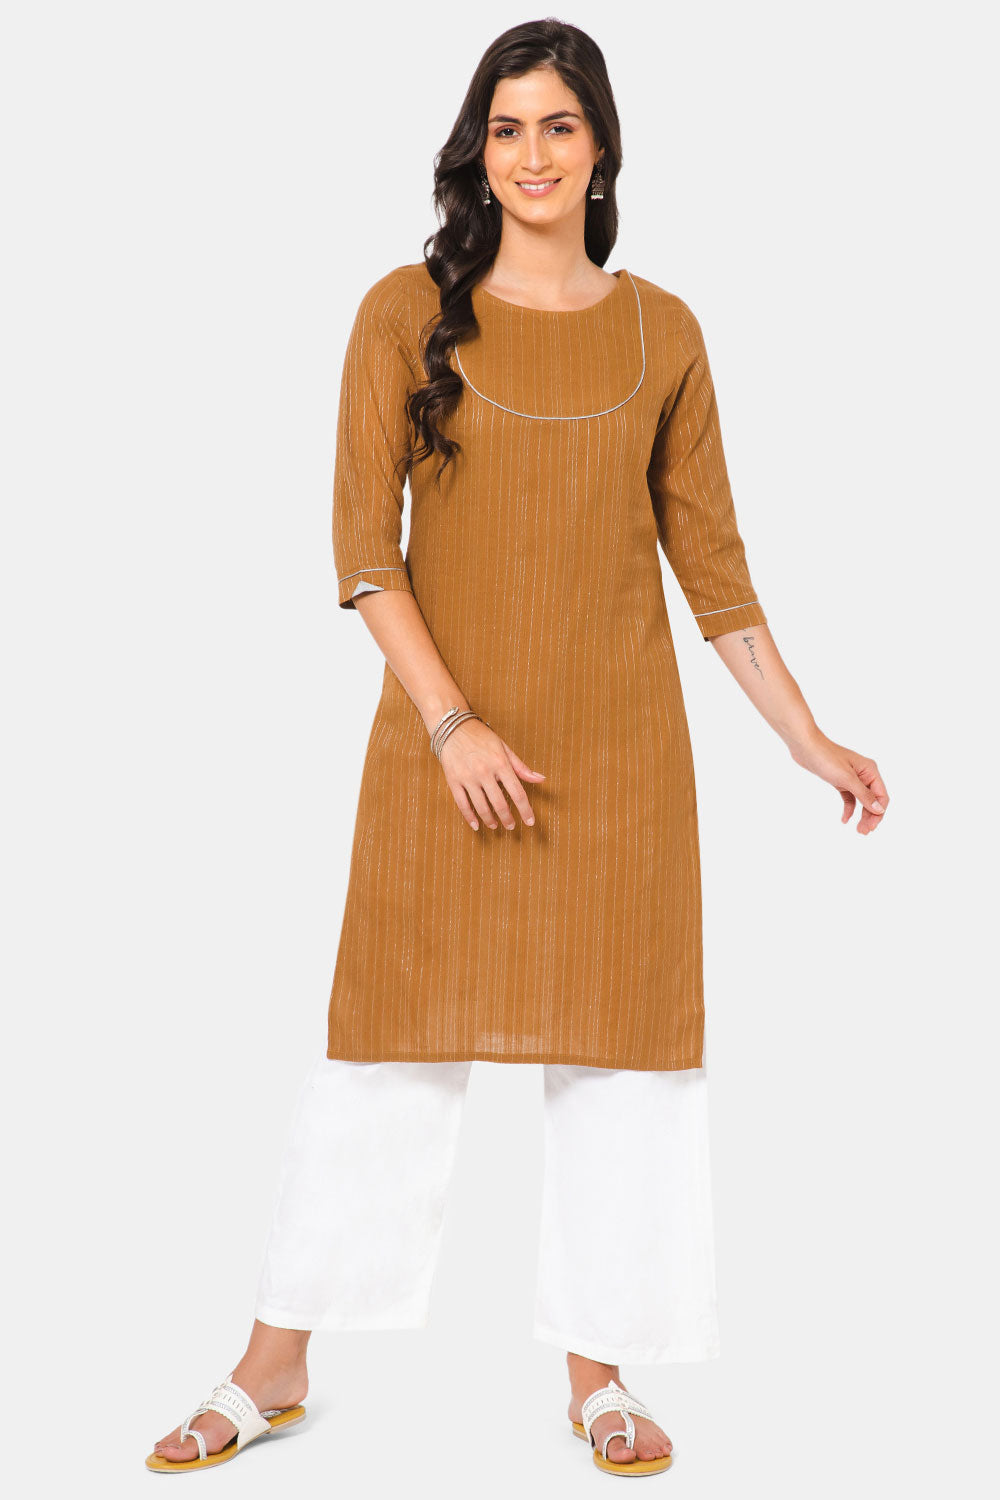 Beige and Fuchsia Embroidered Net Kurti | Net kurti, Designer kurti  patterns, Designer dresses indian